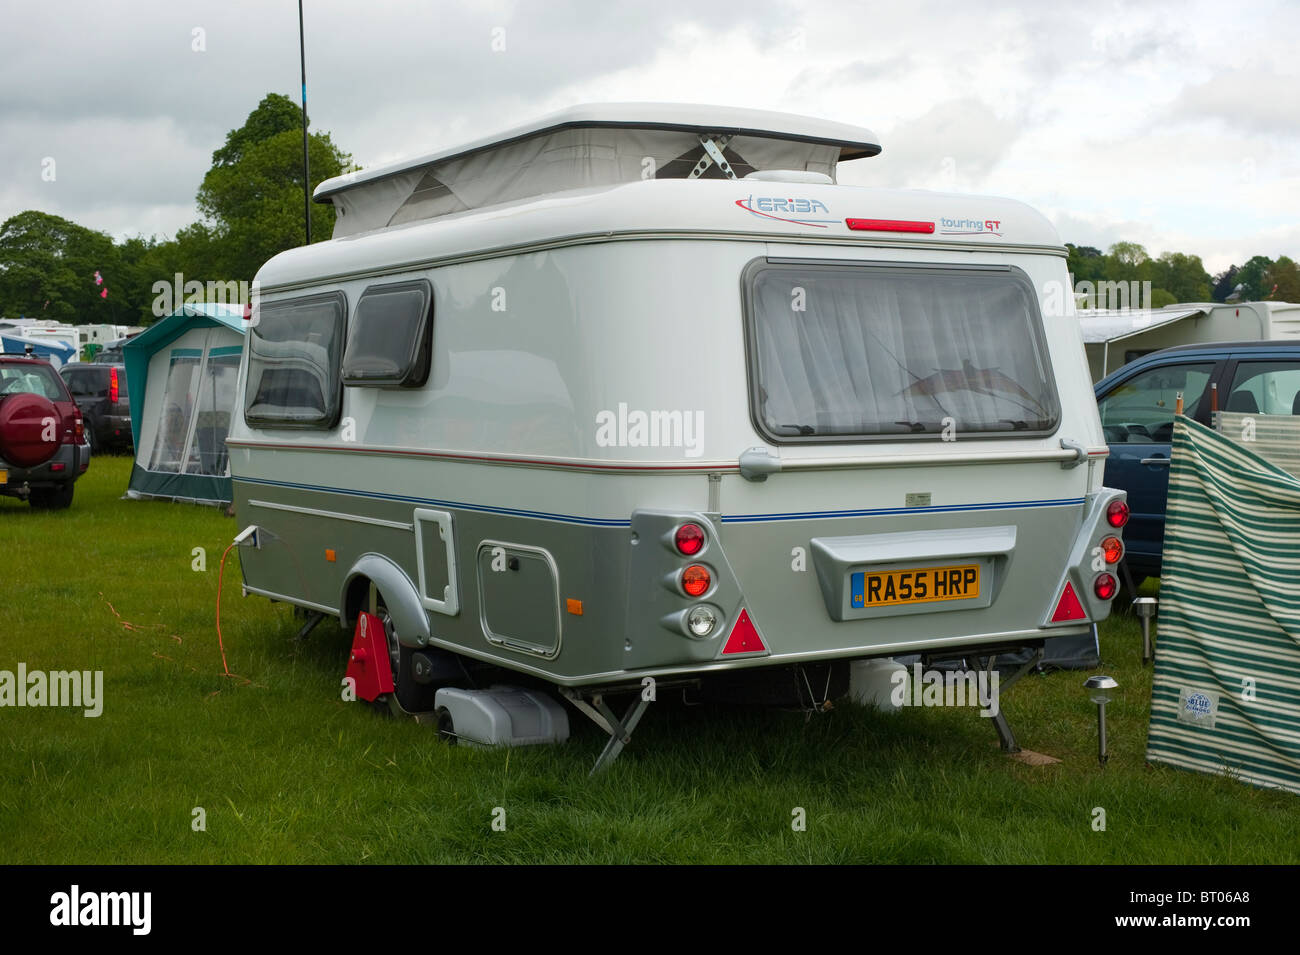 Eriba caravan hi-res stock photography and images - Alamy